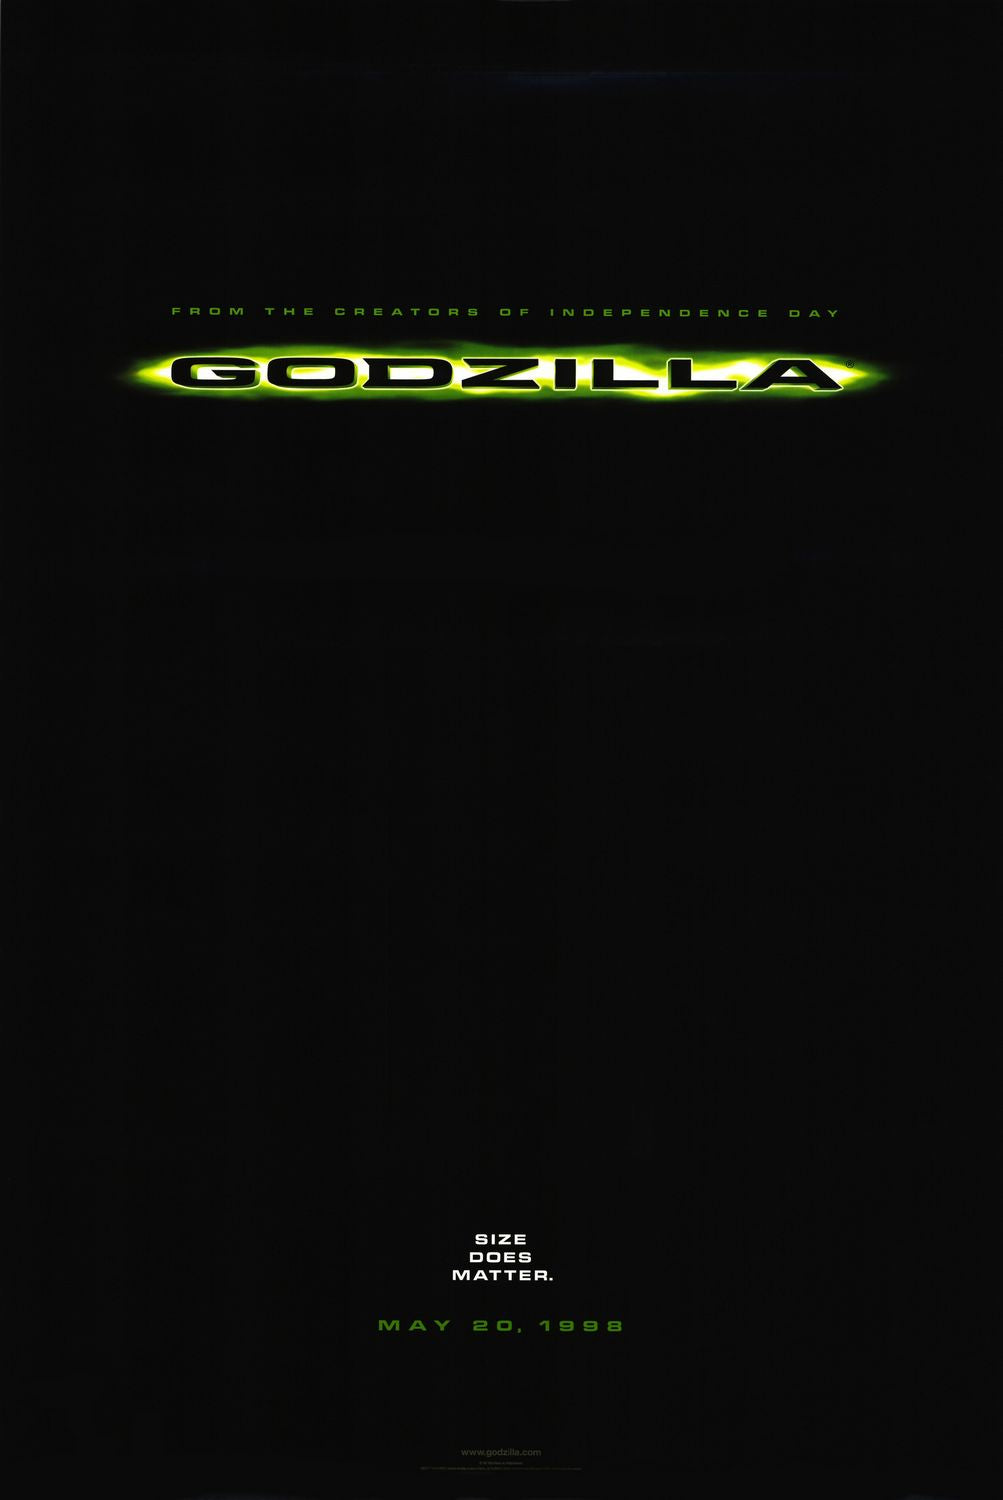 Poster Pelicula Godzilla